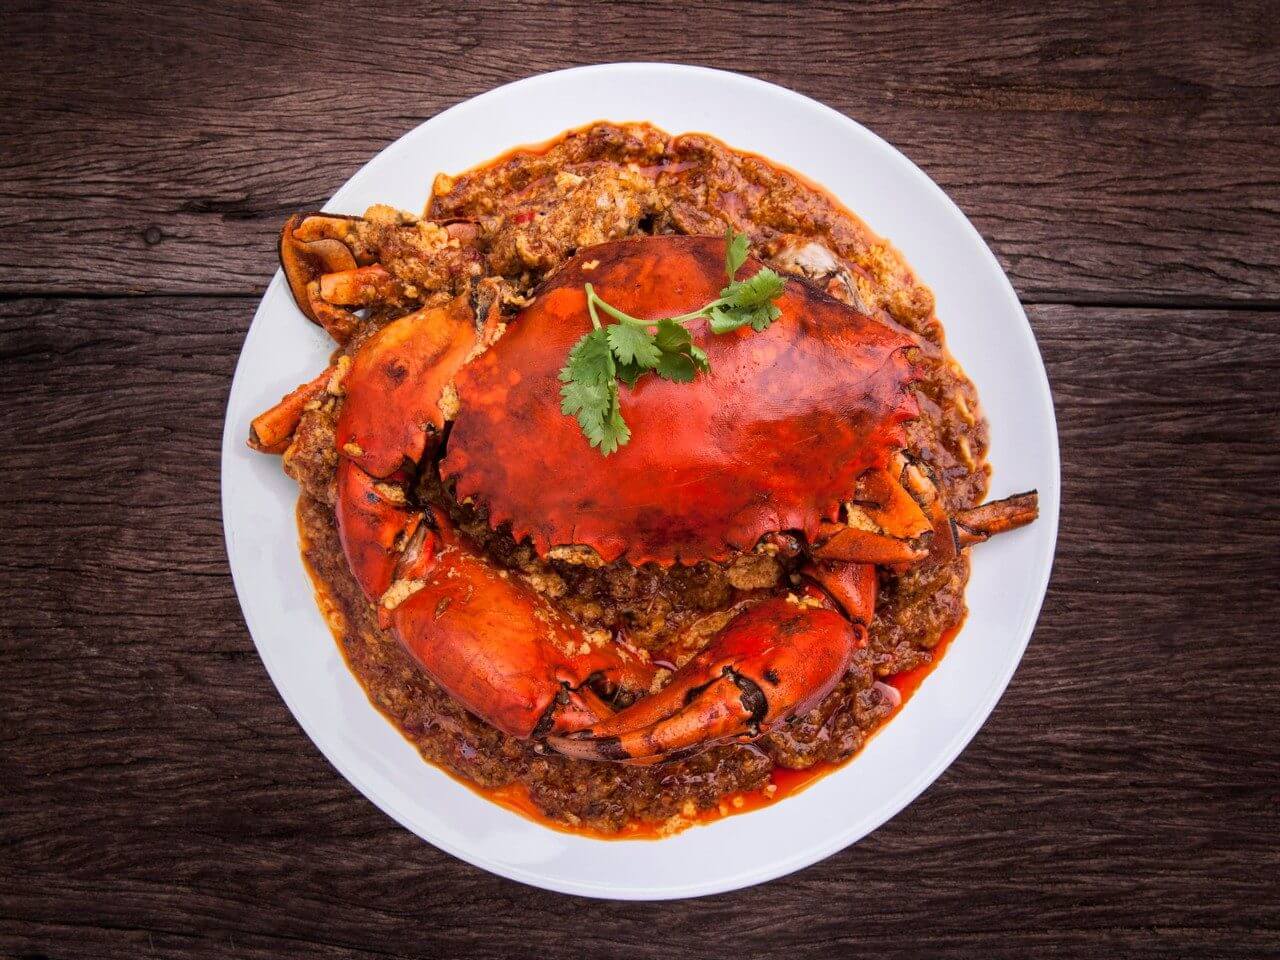 8. Chilli Crab is amazing